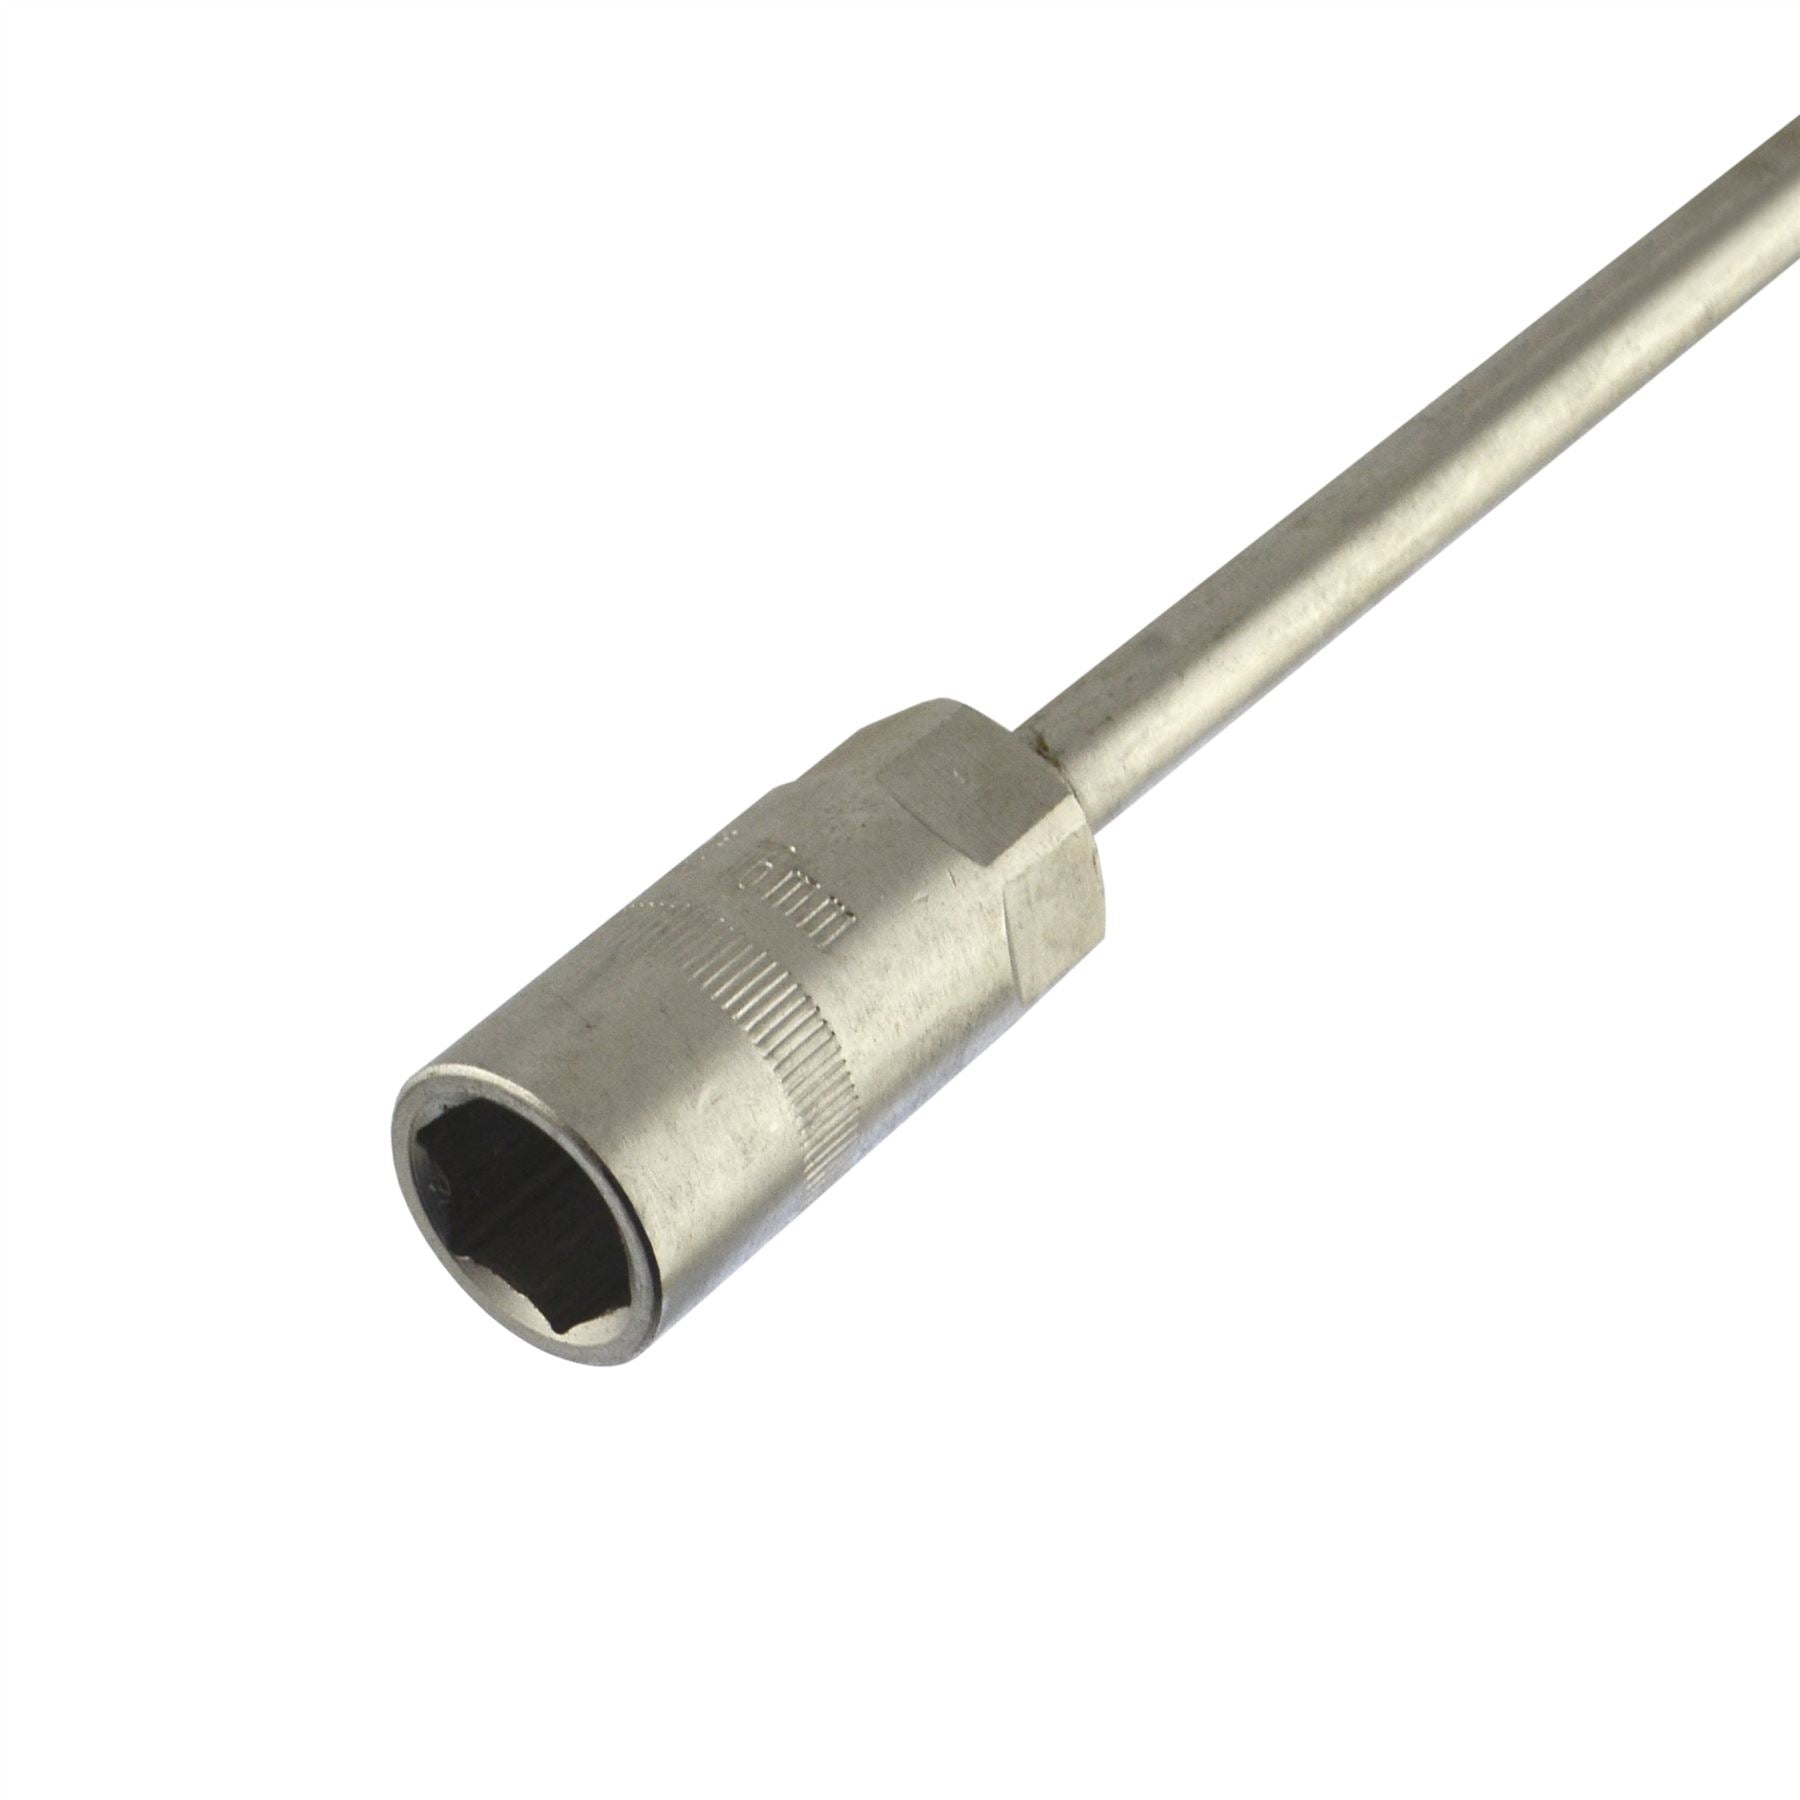 8mm - 17mm Metric Sizes T-Bar Socket Spanner Extra Long Wrench Nut Spinner